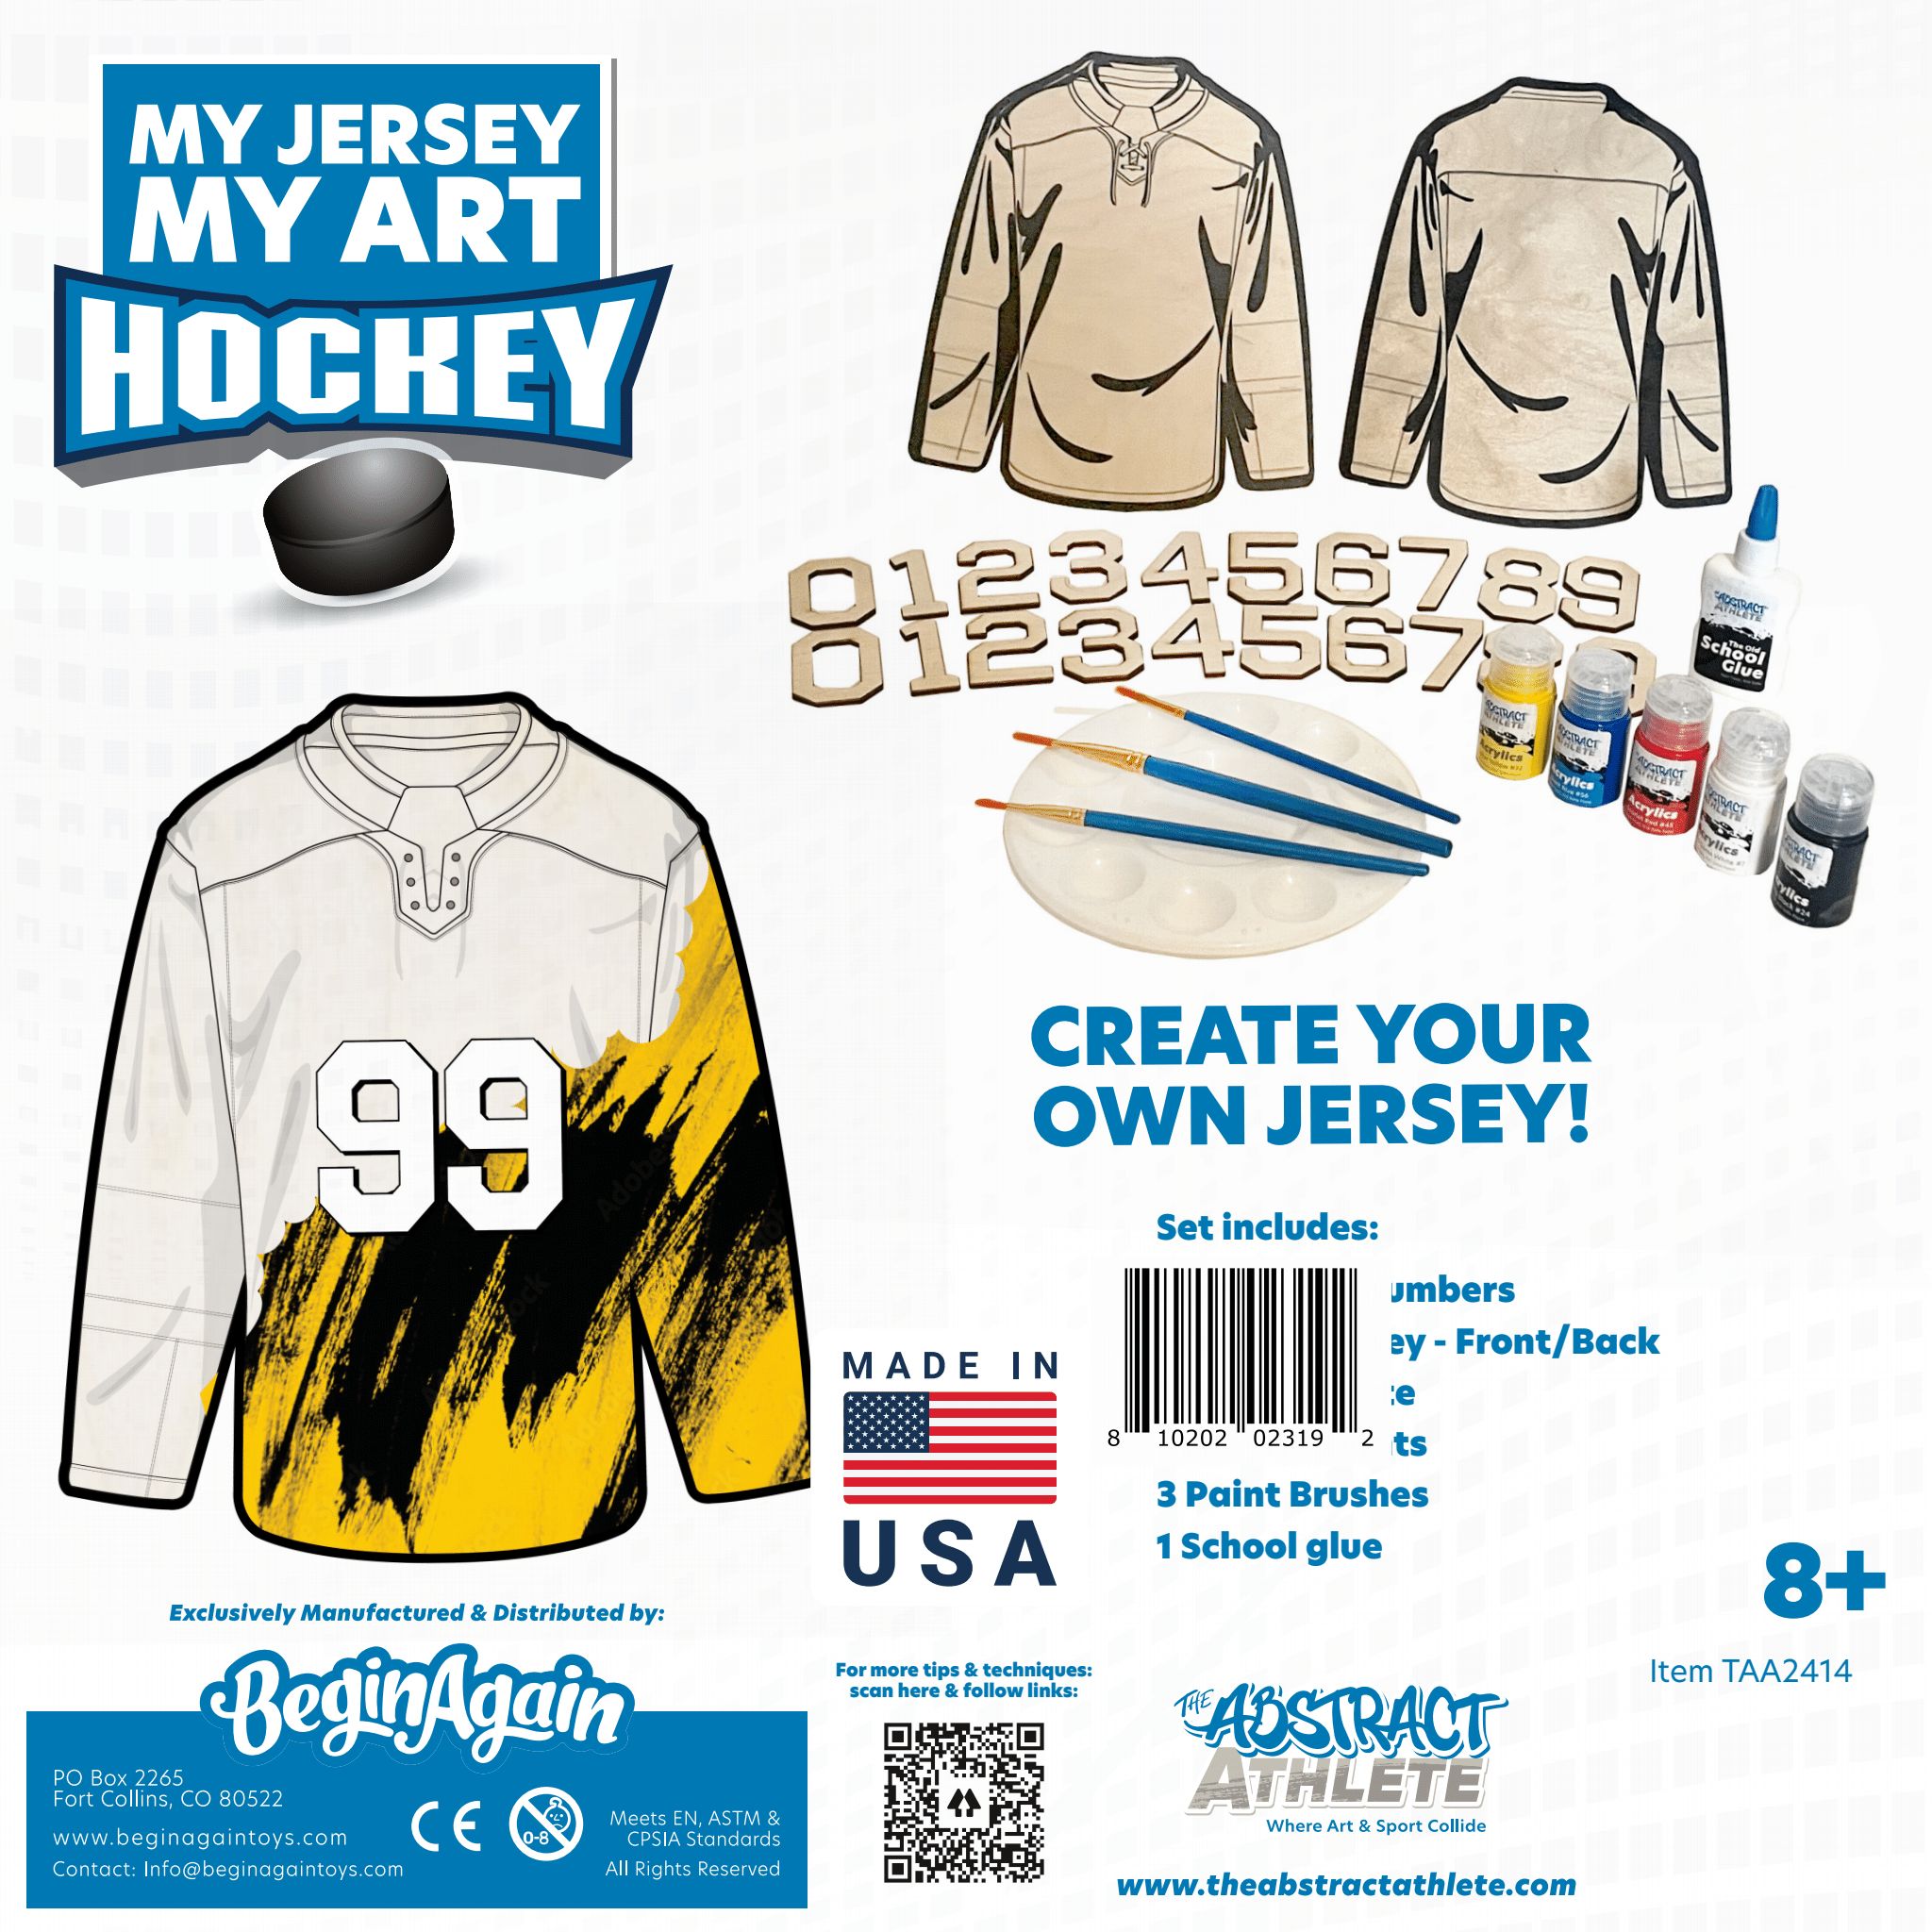 My Jersey, My Art - Hockey